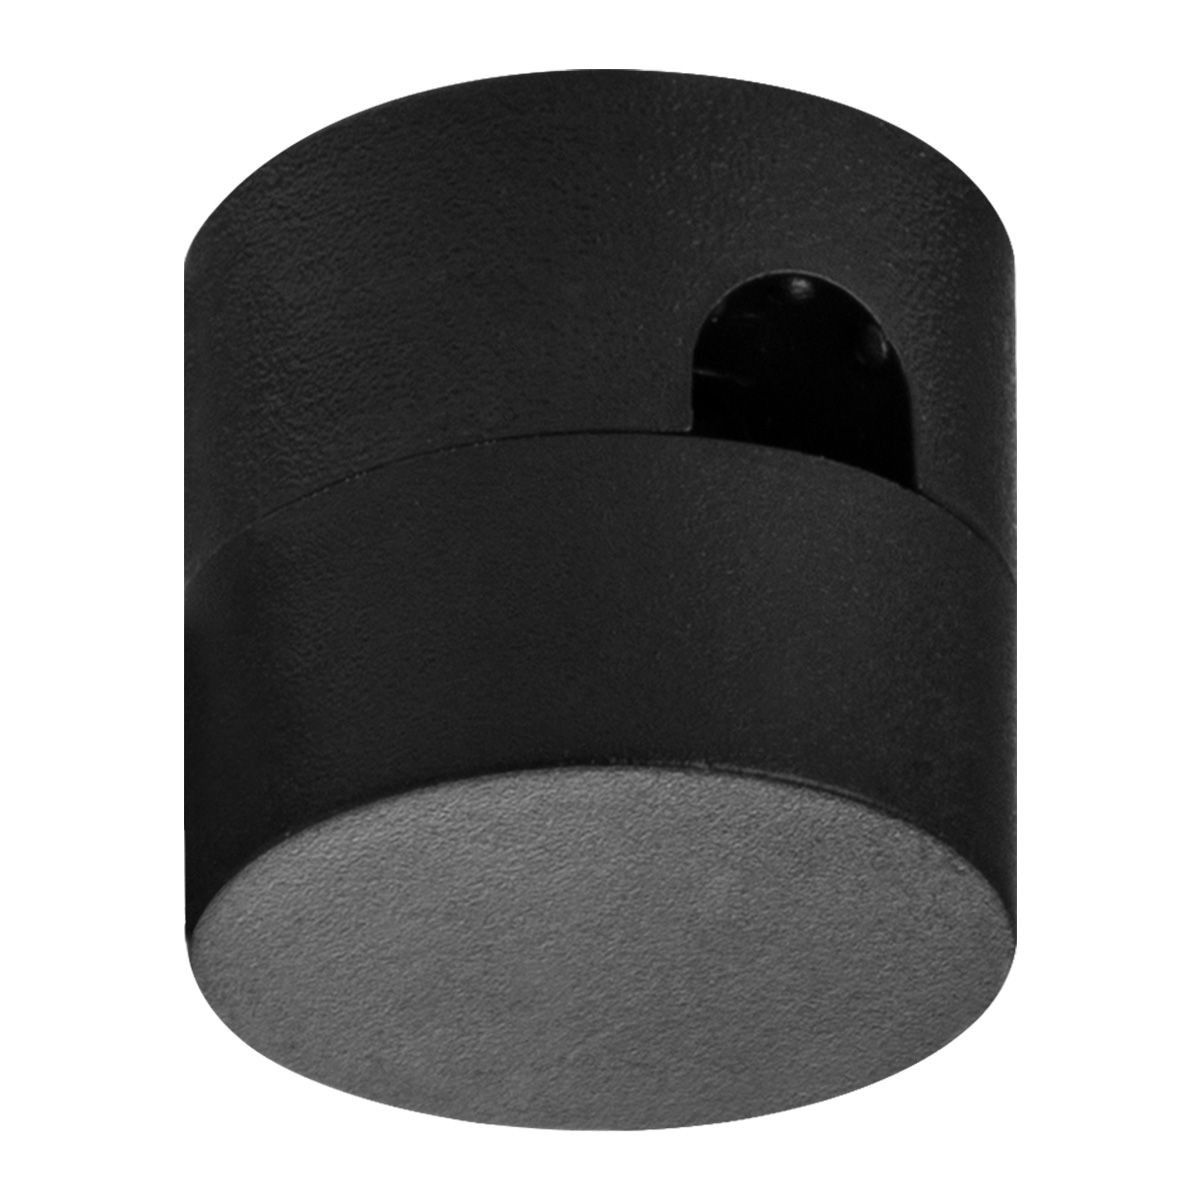 Light depot - snoerhouder design Dot - zwart - Outlet